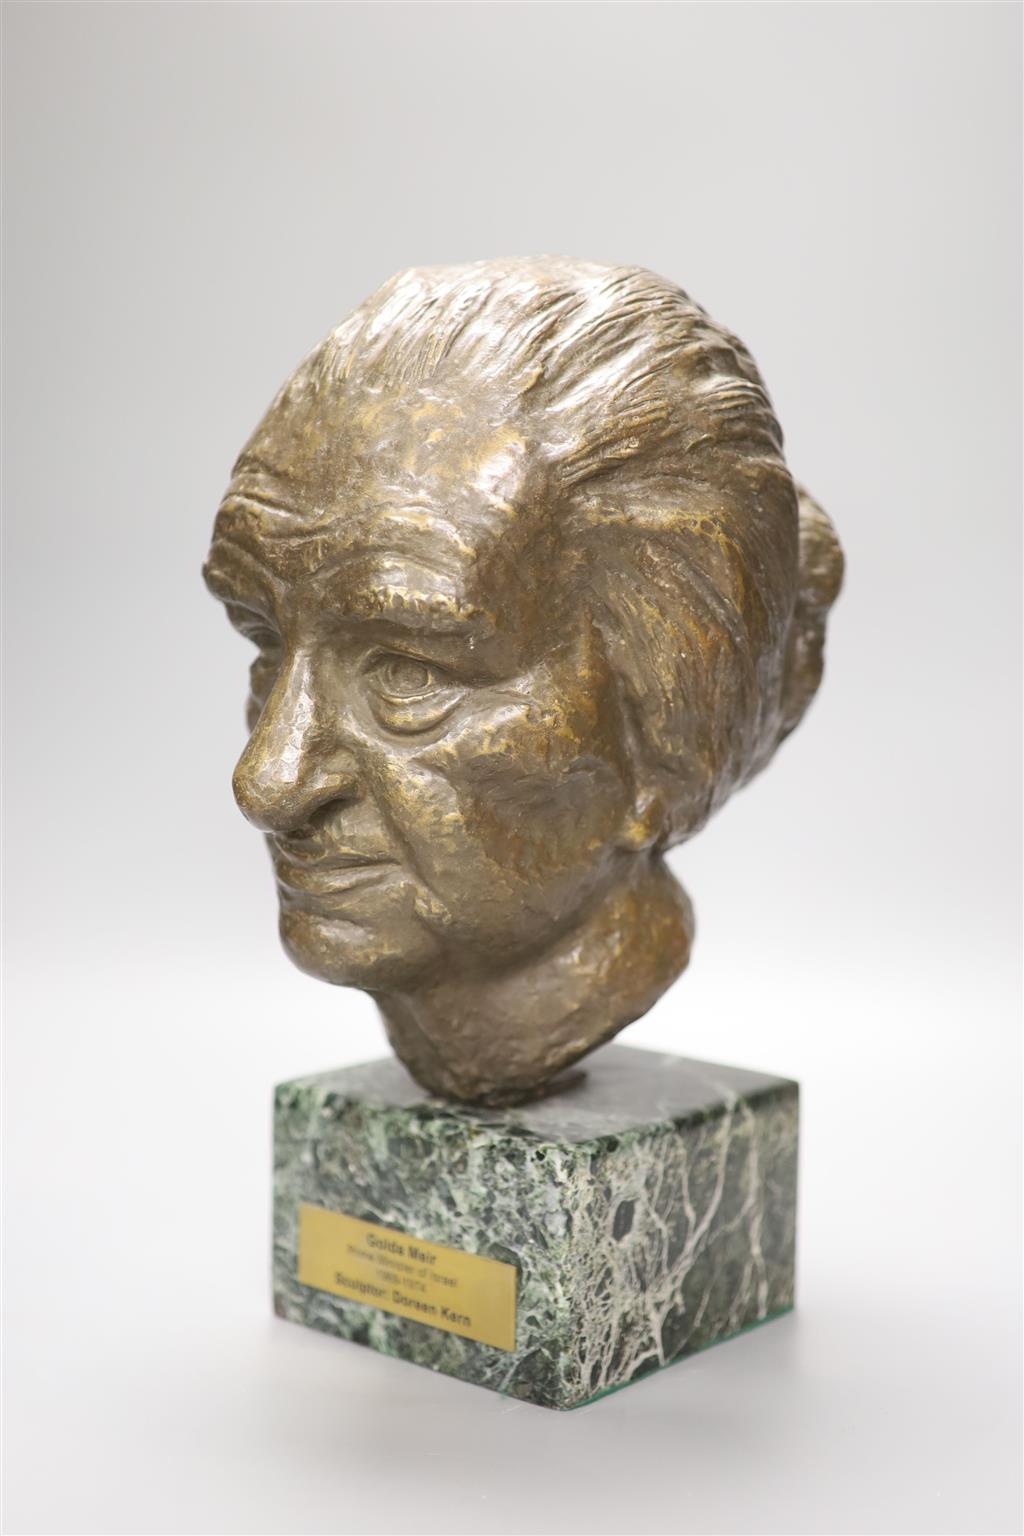 Doreen Kern, bronze bust of Golda Meir, Prime Minister of Israel 1969-1974, on marble base, total height 33cm